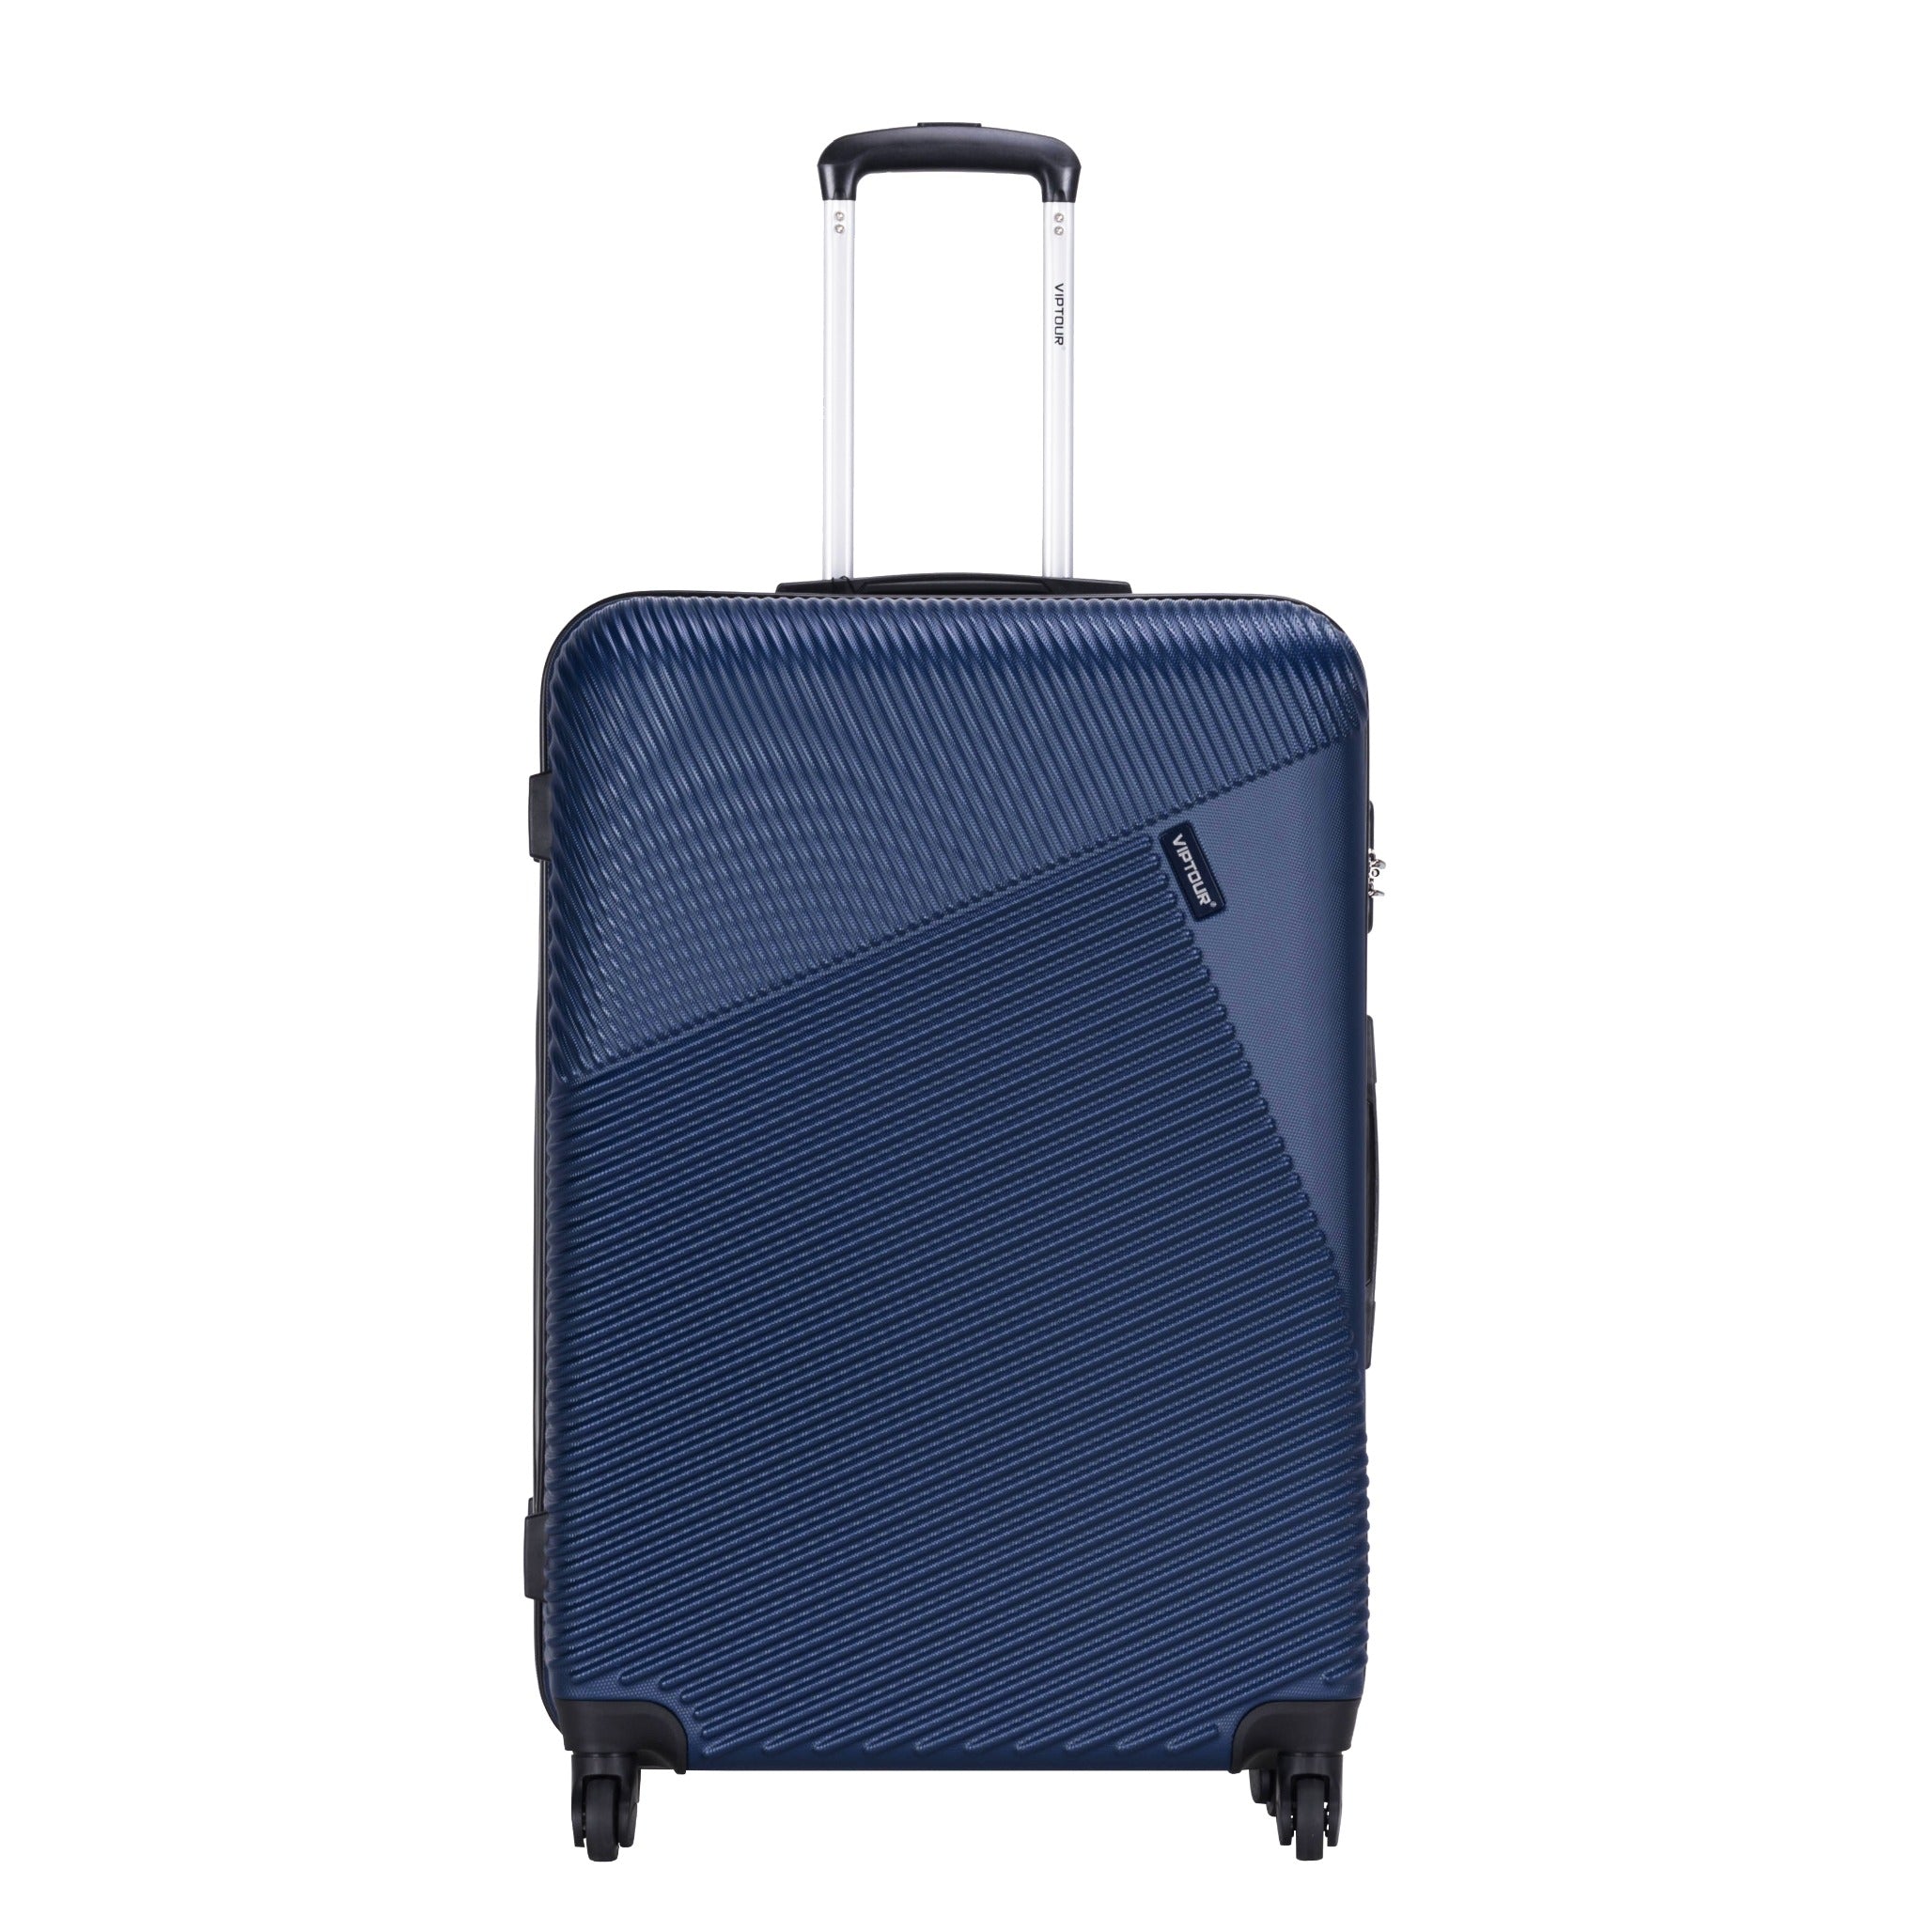 VipTour Abs Trolley Luggage 3PCS Set Dark Blue